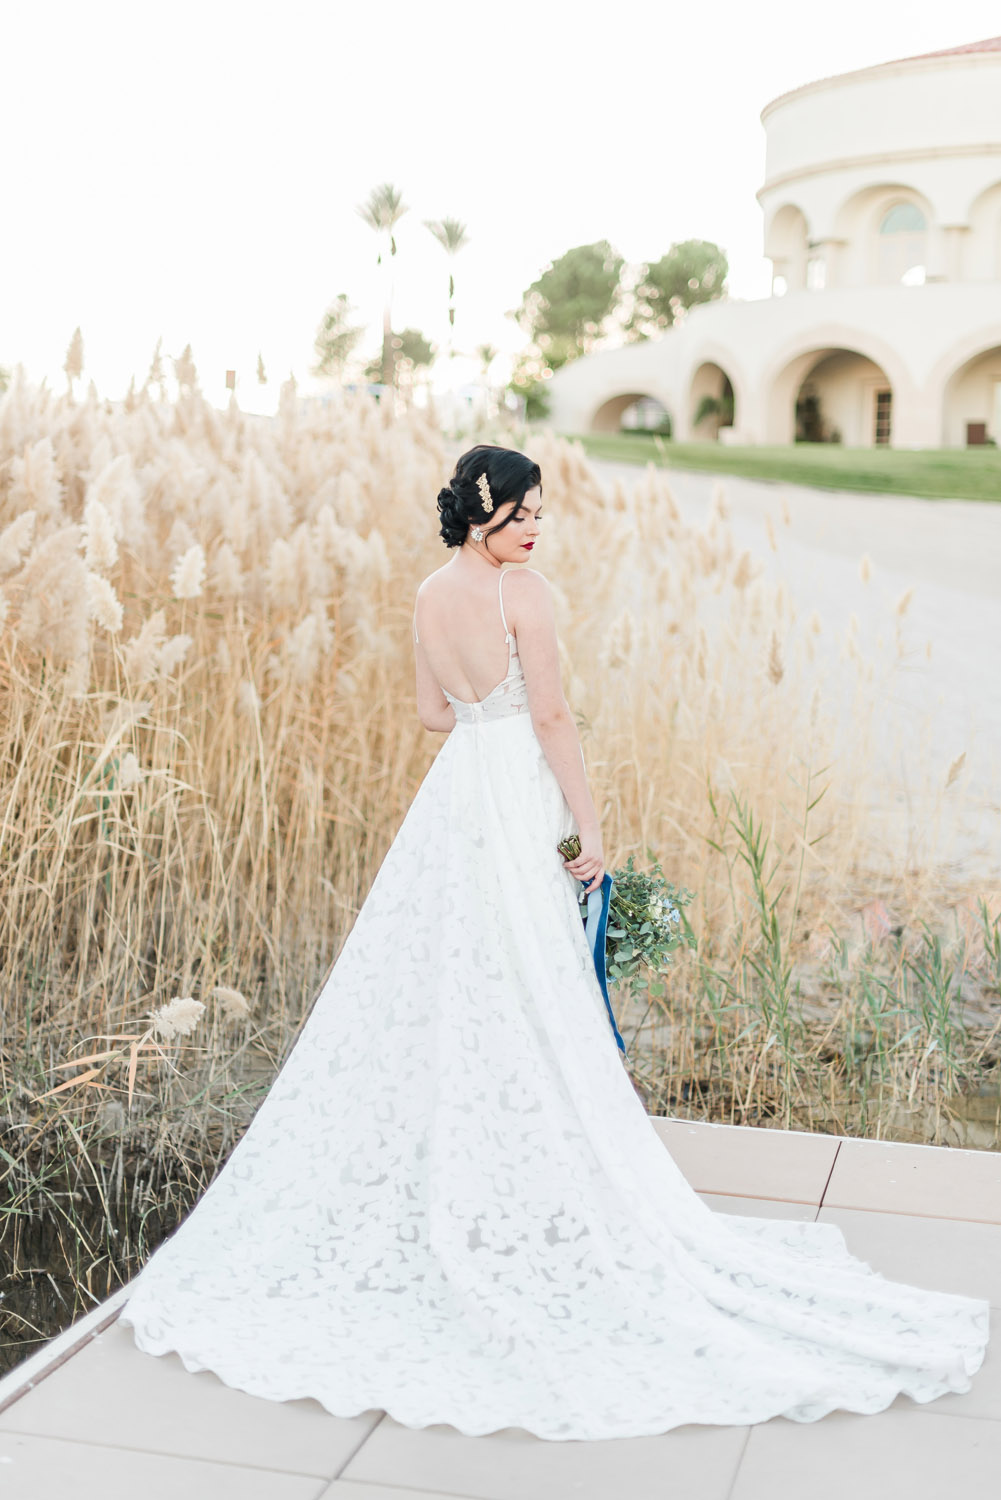 Classic Blue, Coastal Wedding Inspiration at Reflection Bay Golf Club | Kristen Marie Weddings + Portraits, Las Vegas Wedding Photographer